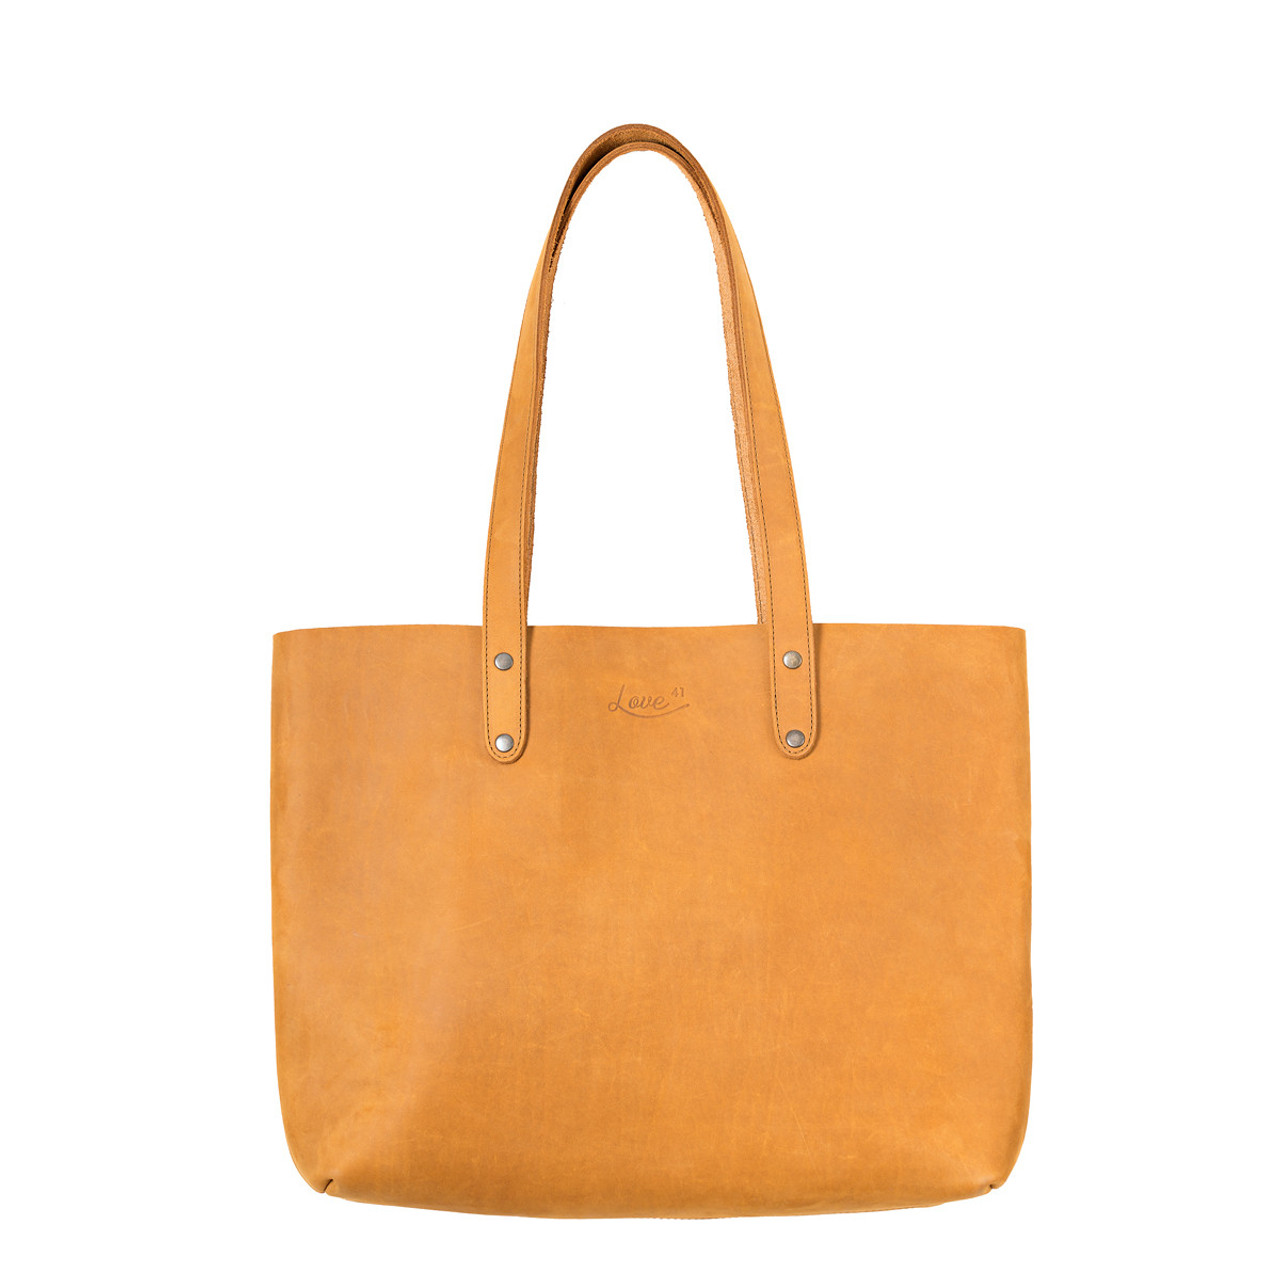 Simple Leather Bag Medium Tote Tan Leather Shoulder Bag 